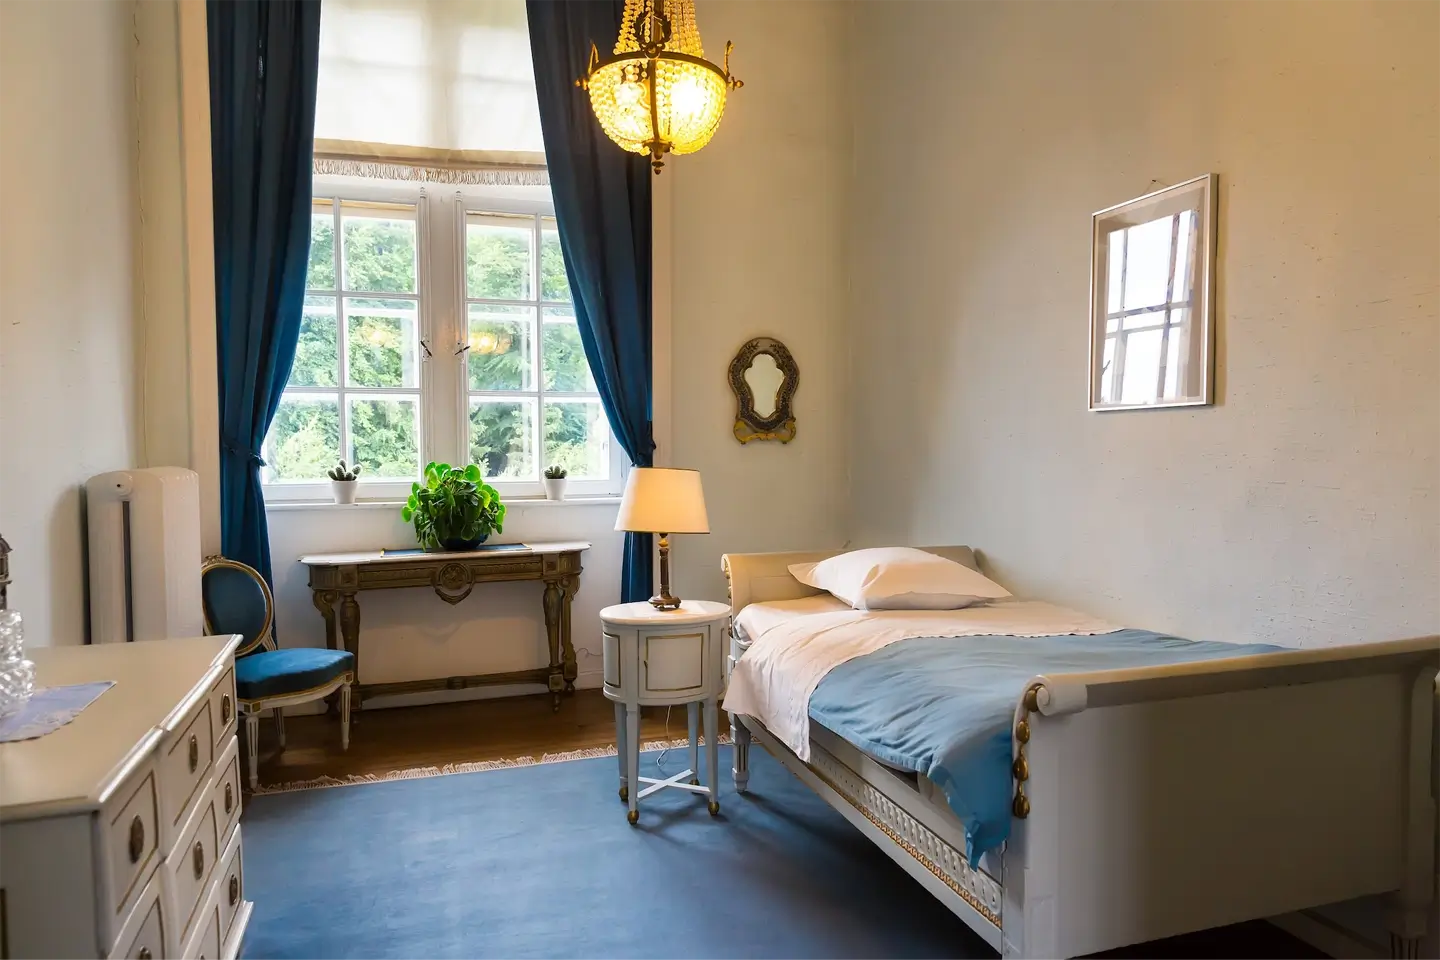 Room interior, white vintage furniture, Europe